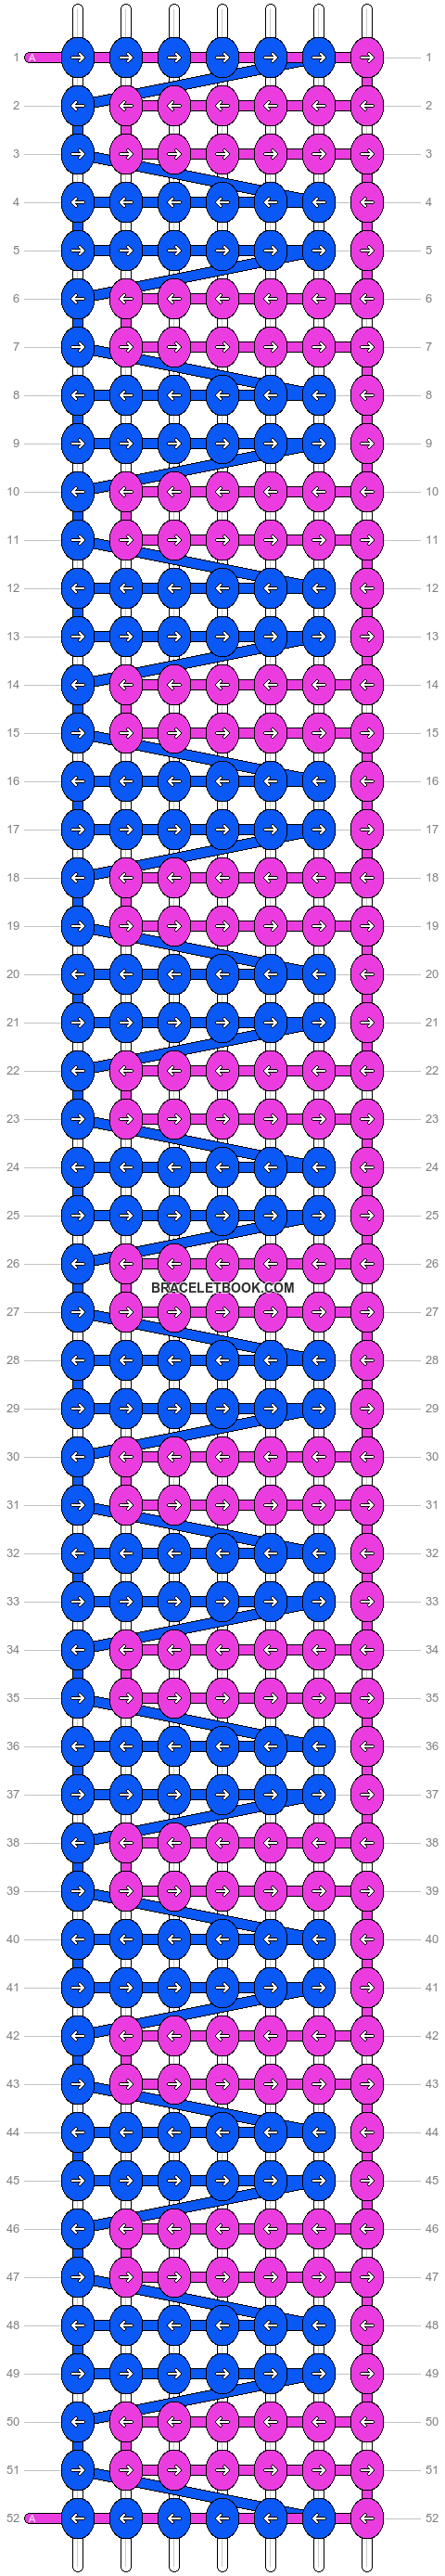 Alpha pattern #15234 variation #13210 pattern